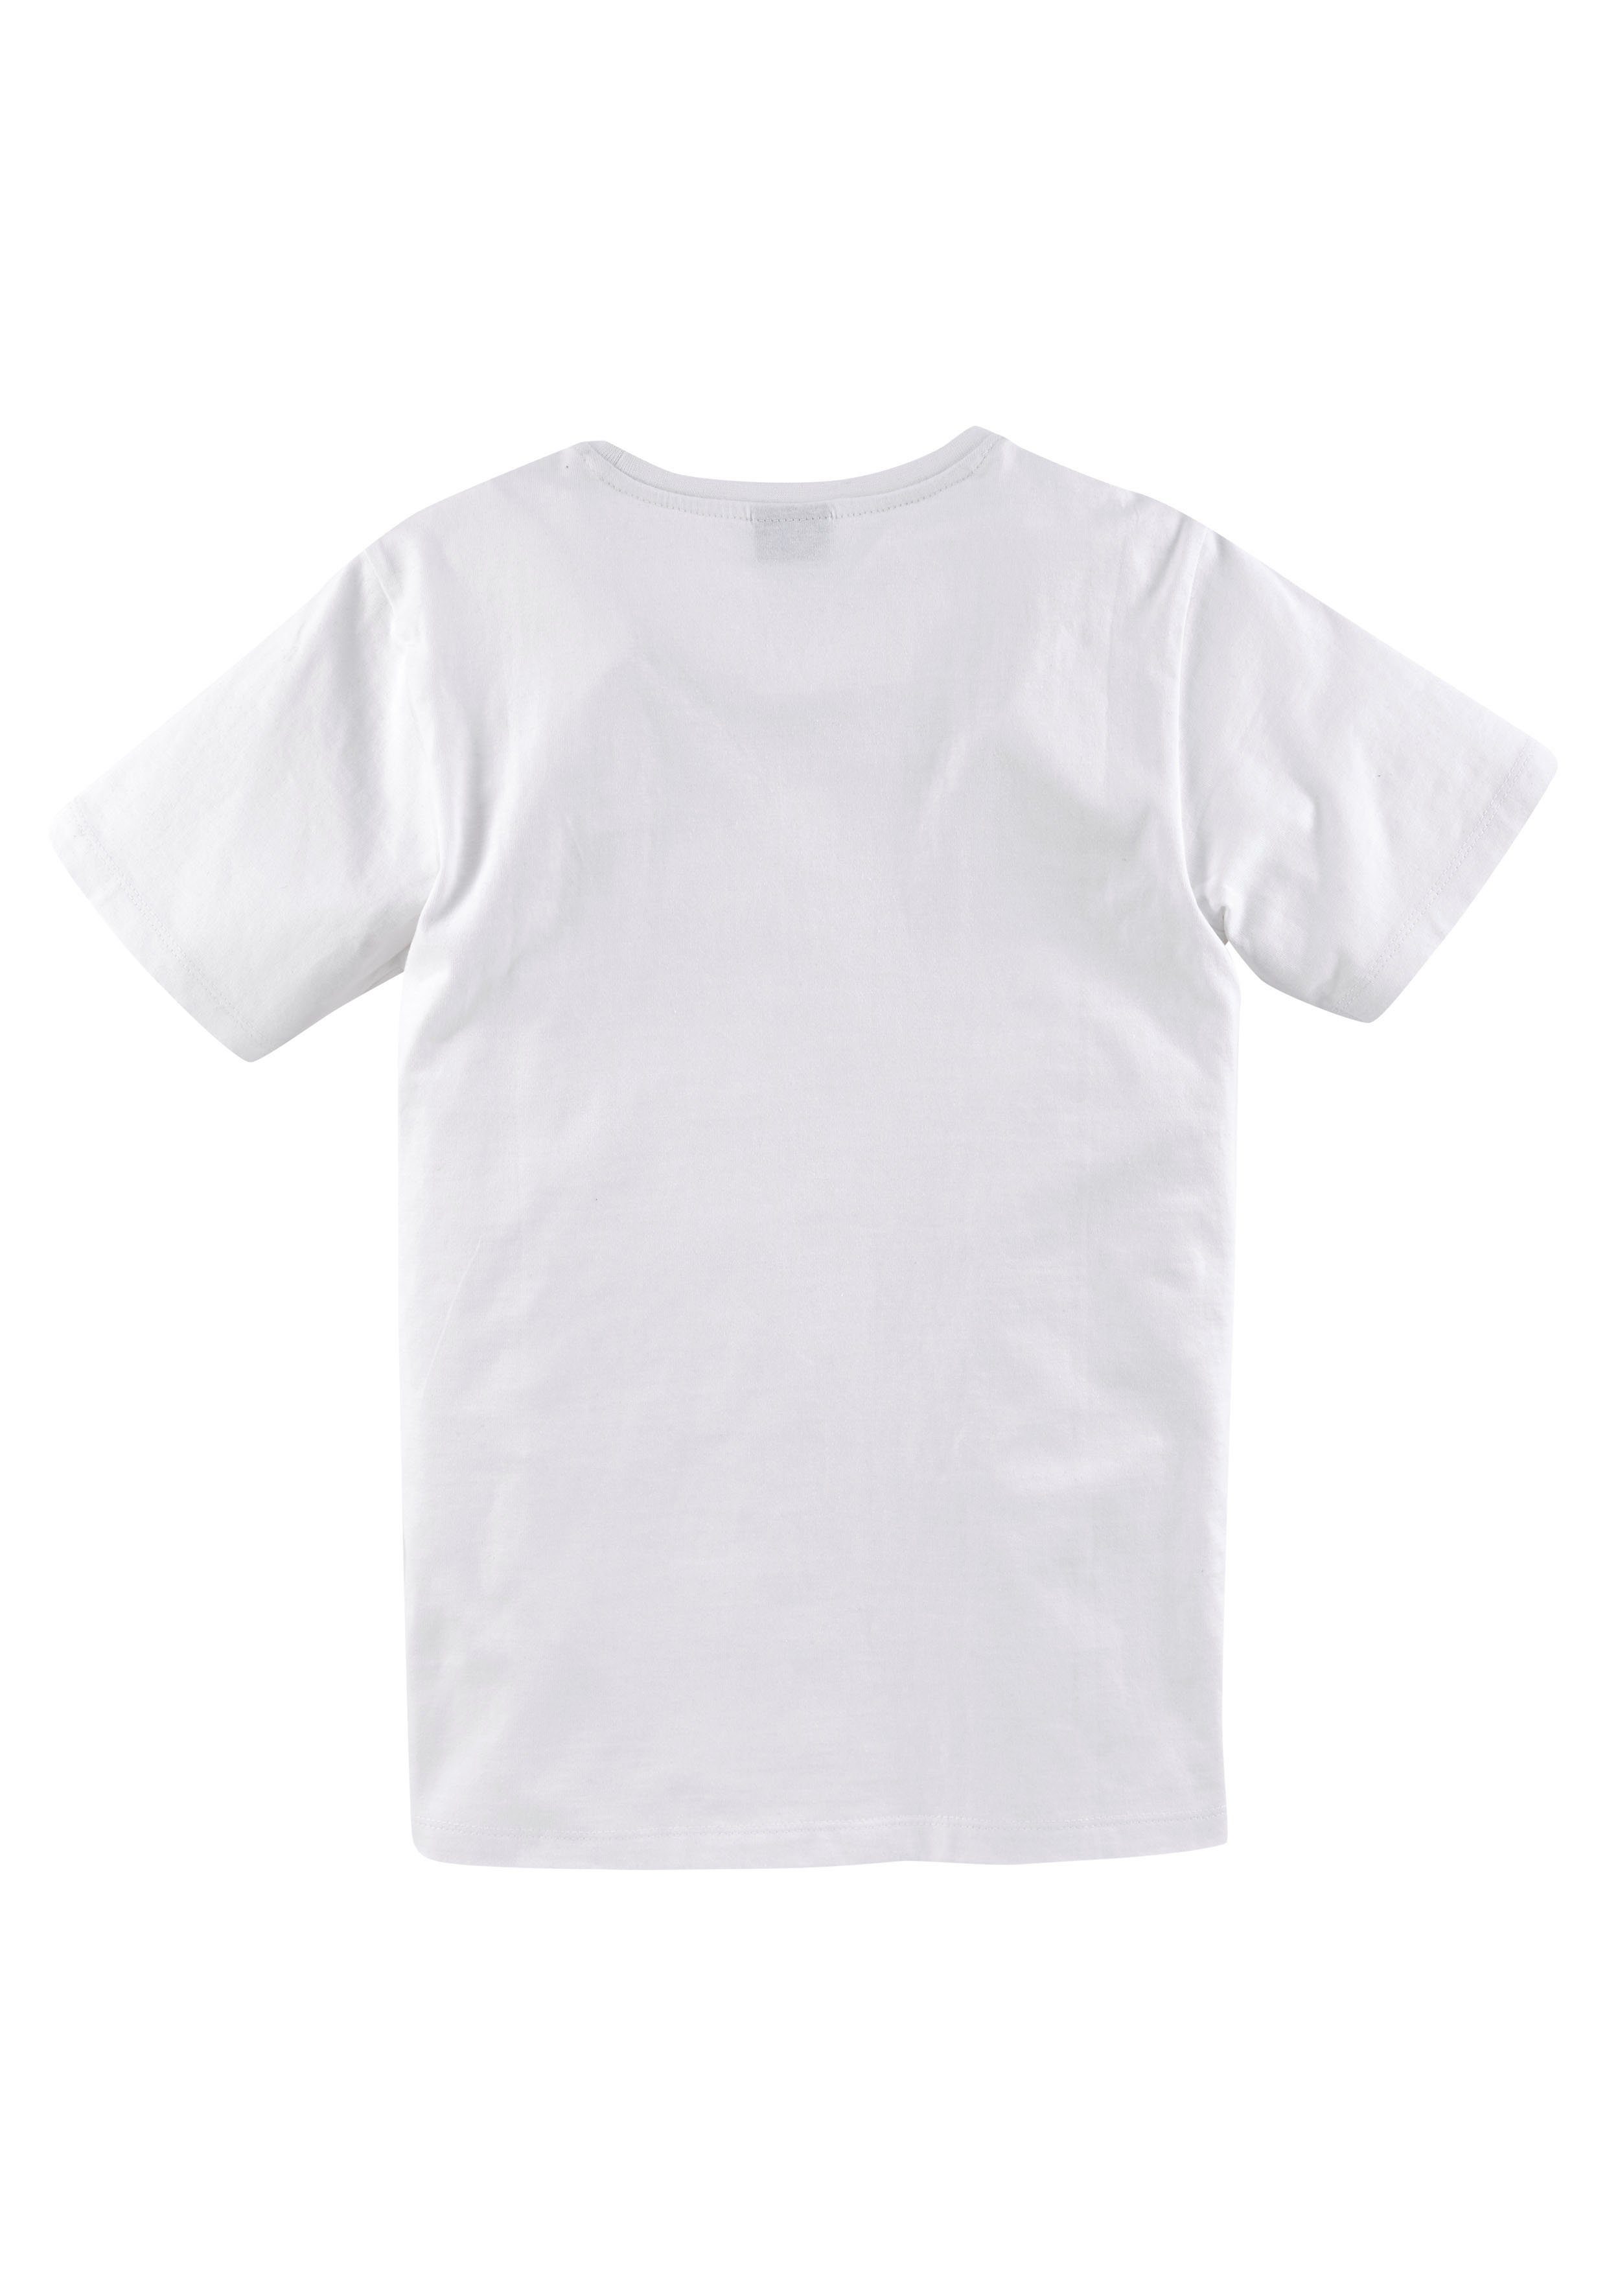 GAMING Spruch KIDSWORLD T-Shirt ZONE,